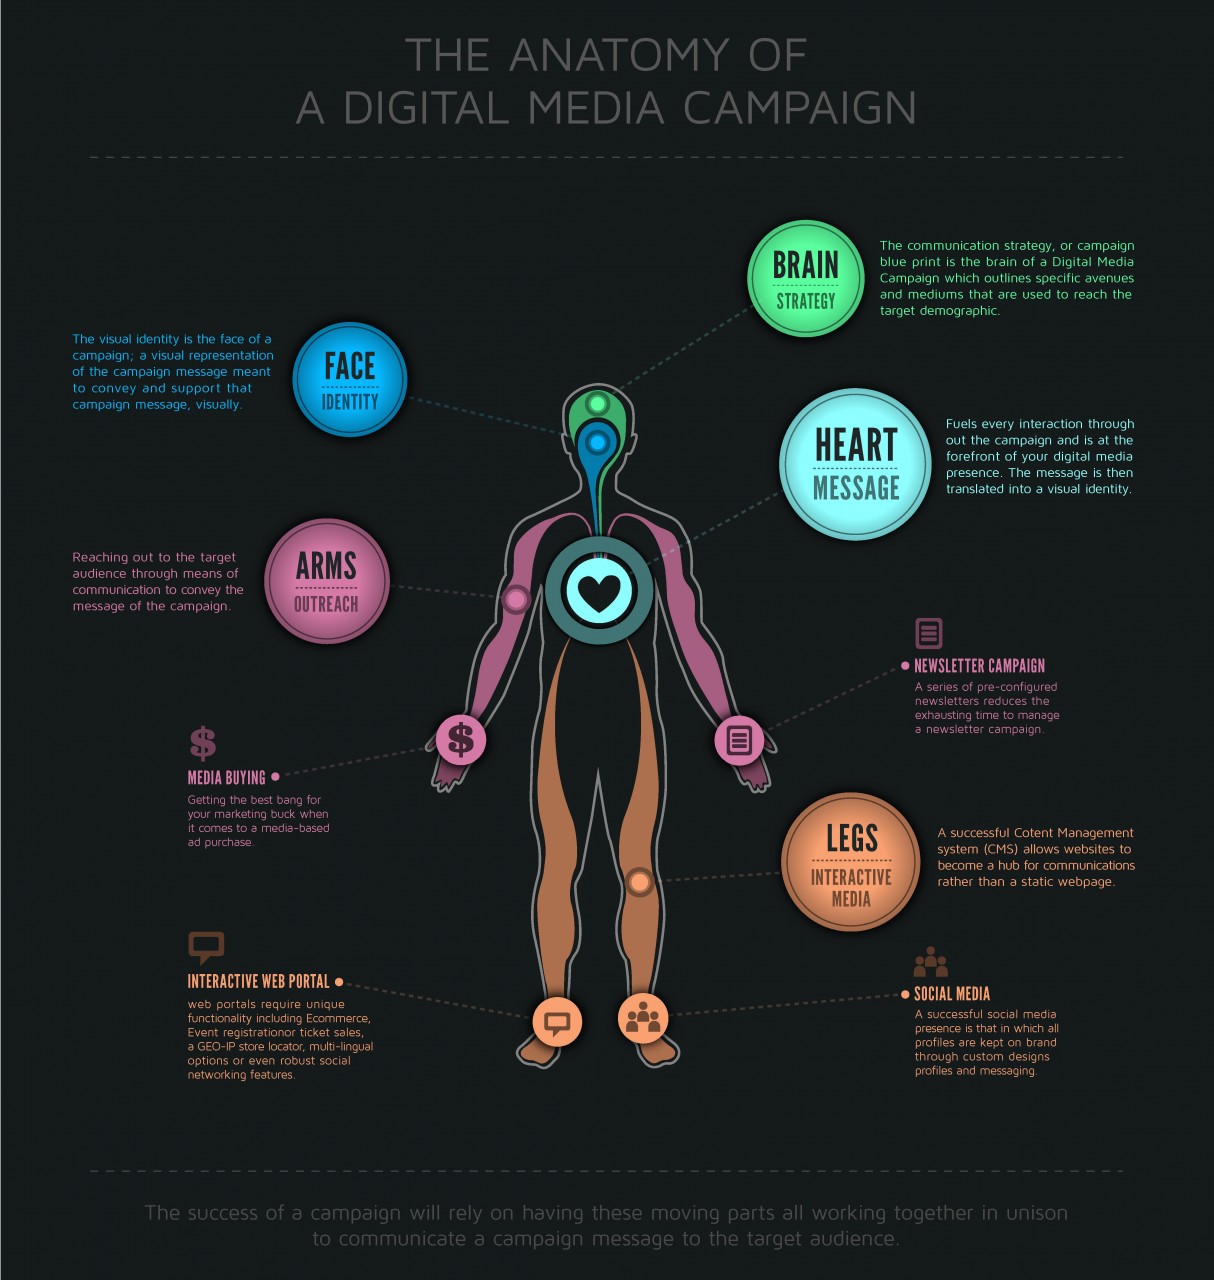 The Anatomy of a Digital Media Campaign